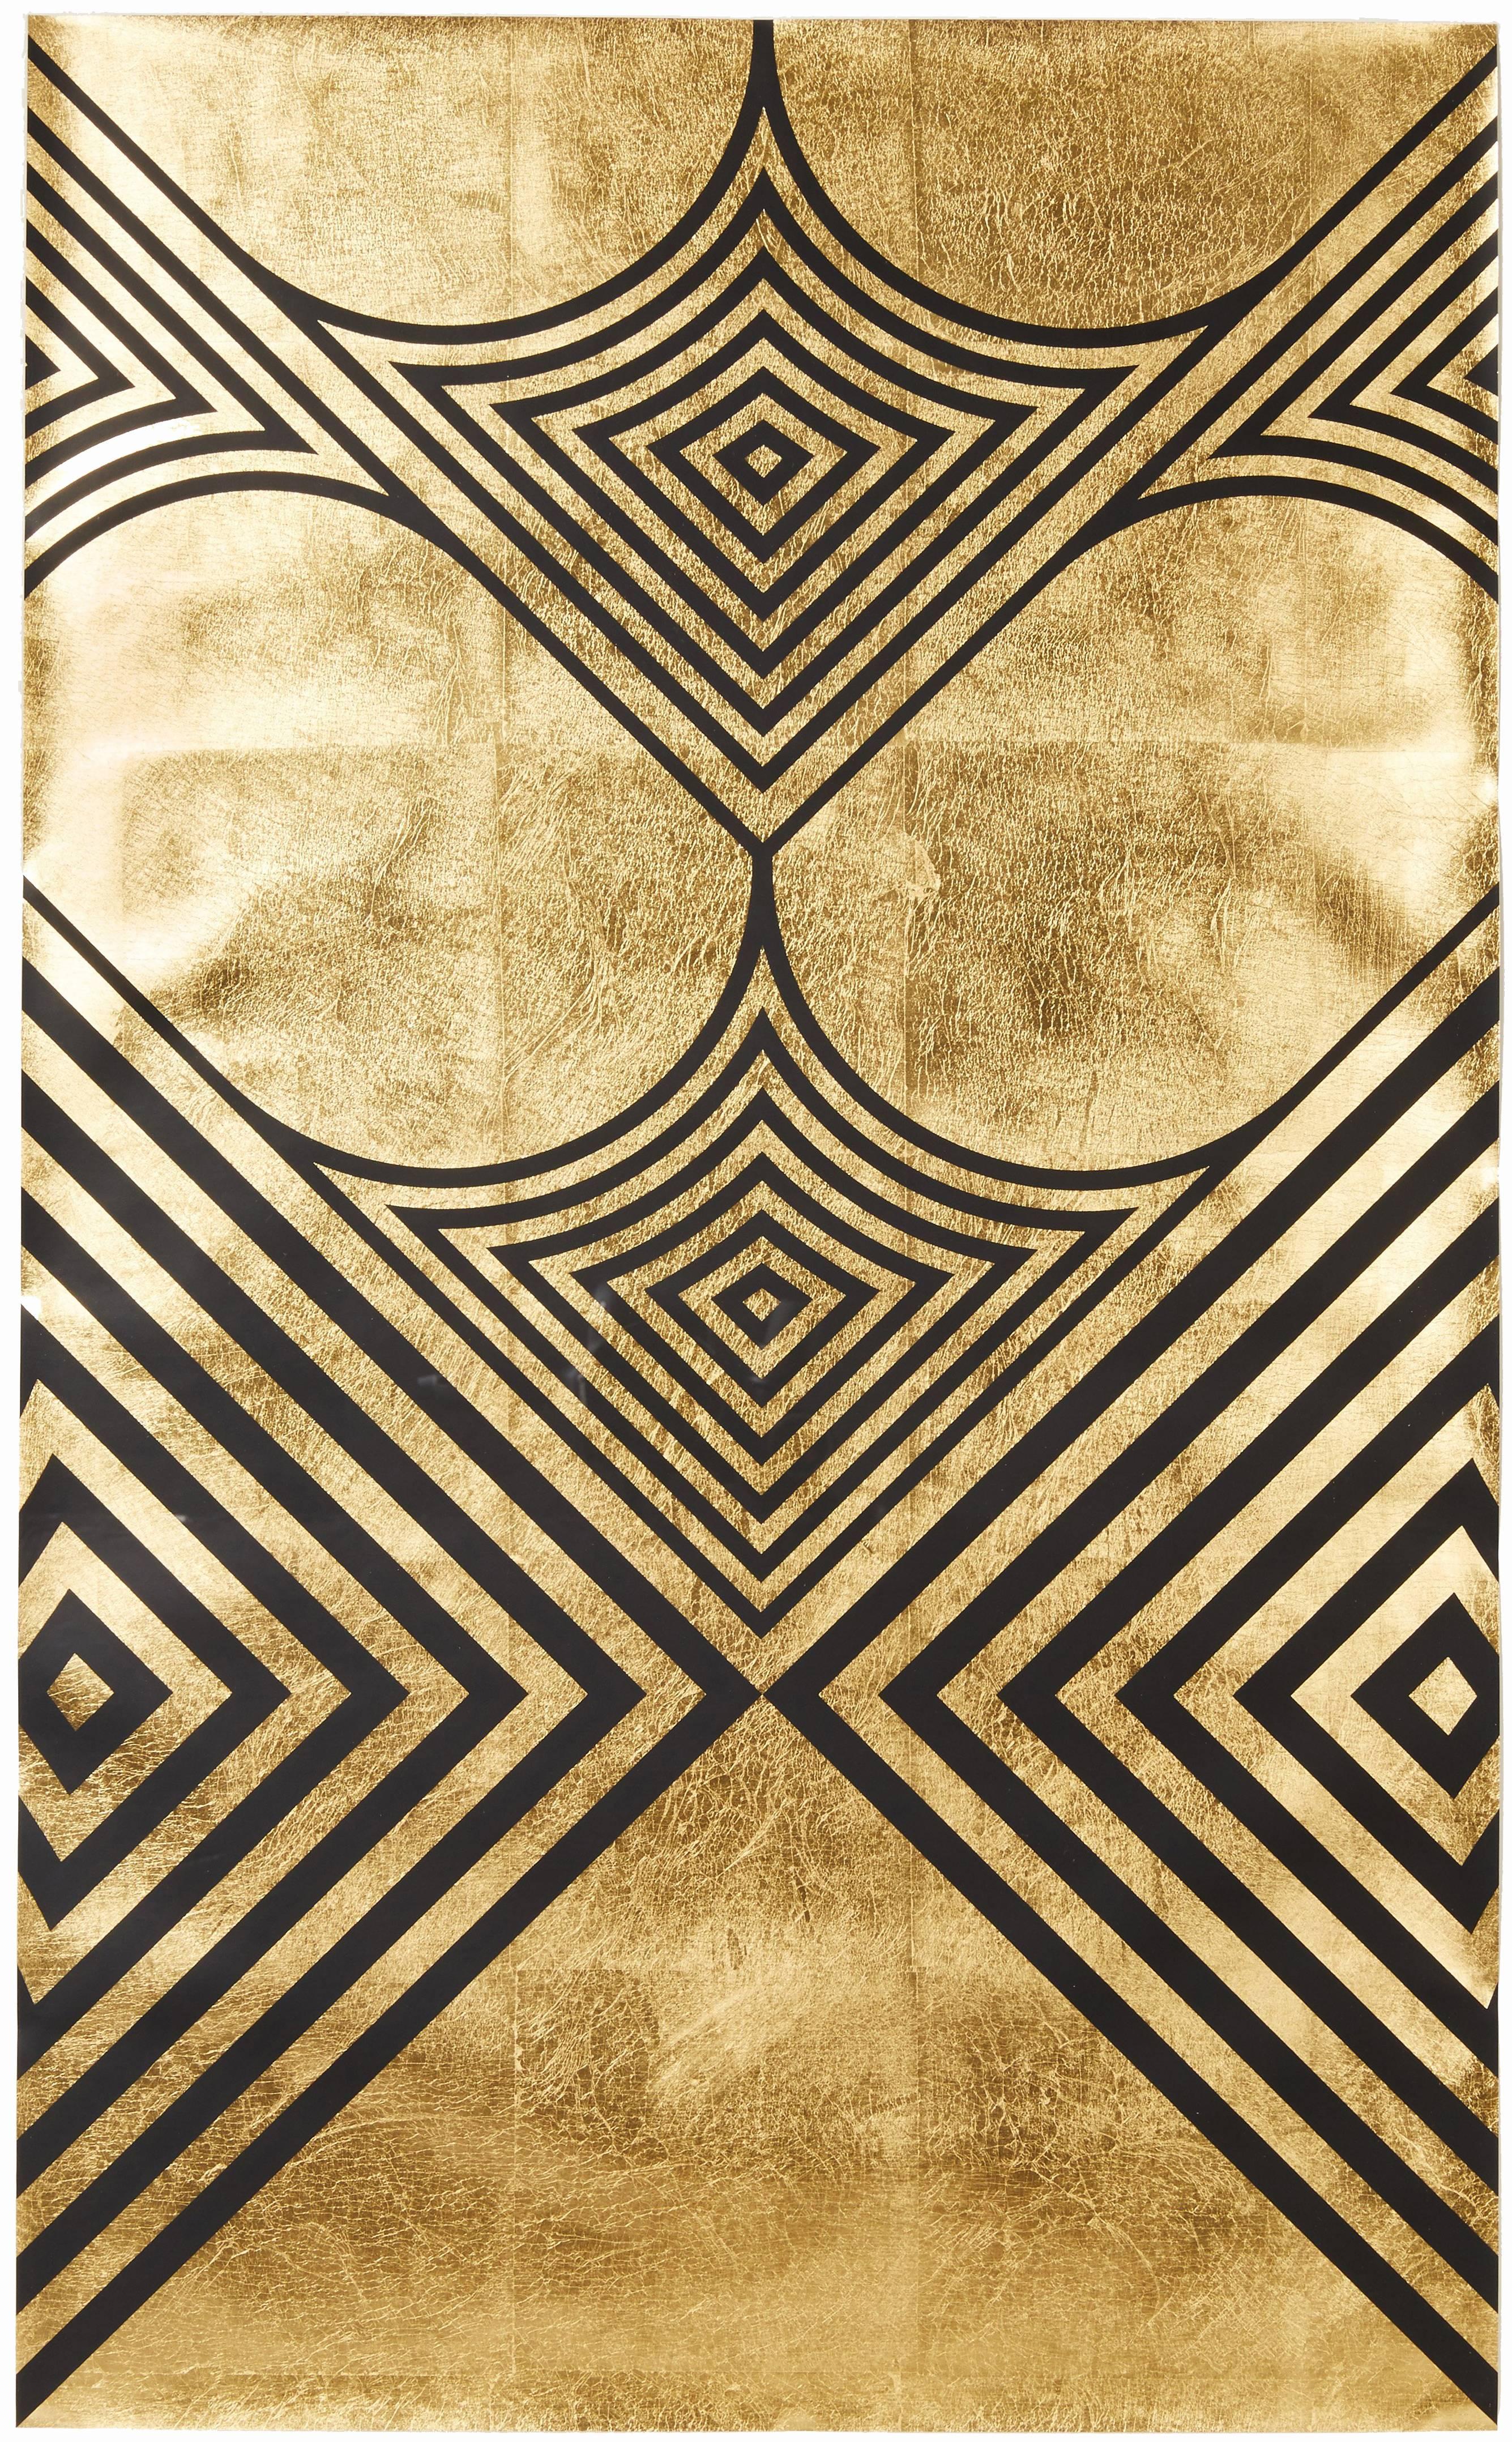 Hunt Arrows II (design gold black metallic work on paper gold stripes Art Deco) - Mixed Media Art by Lisa Hunt